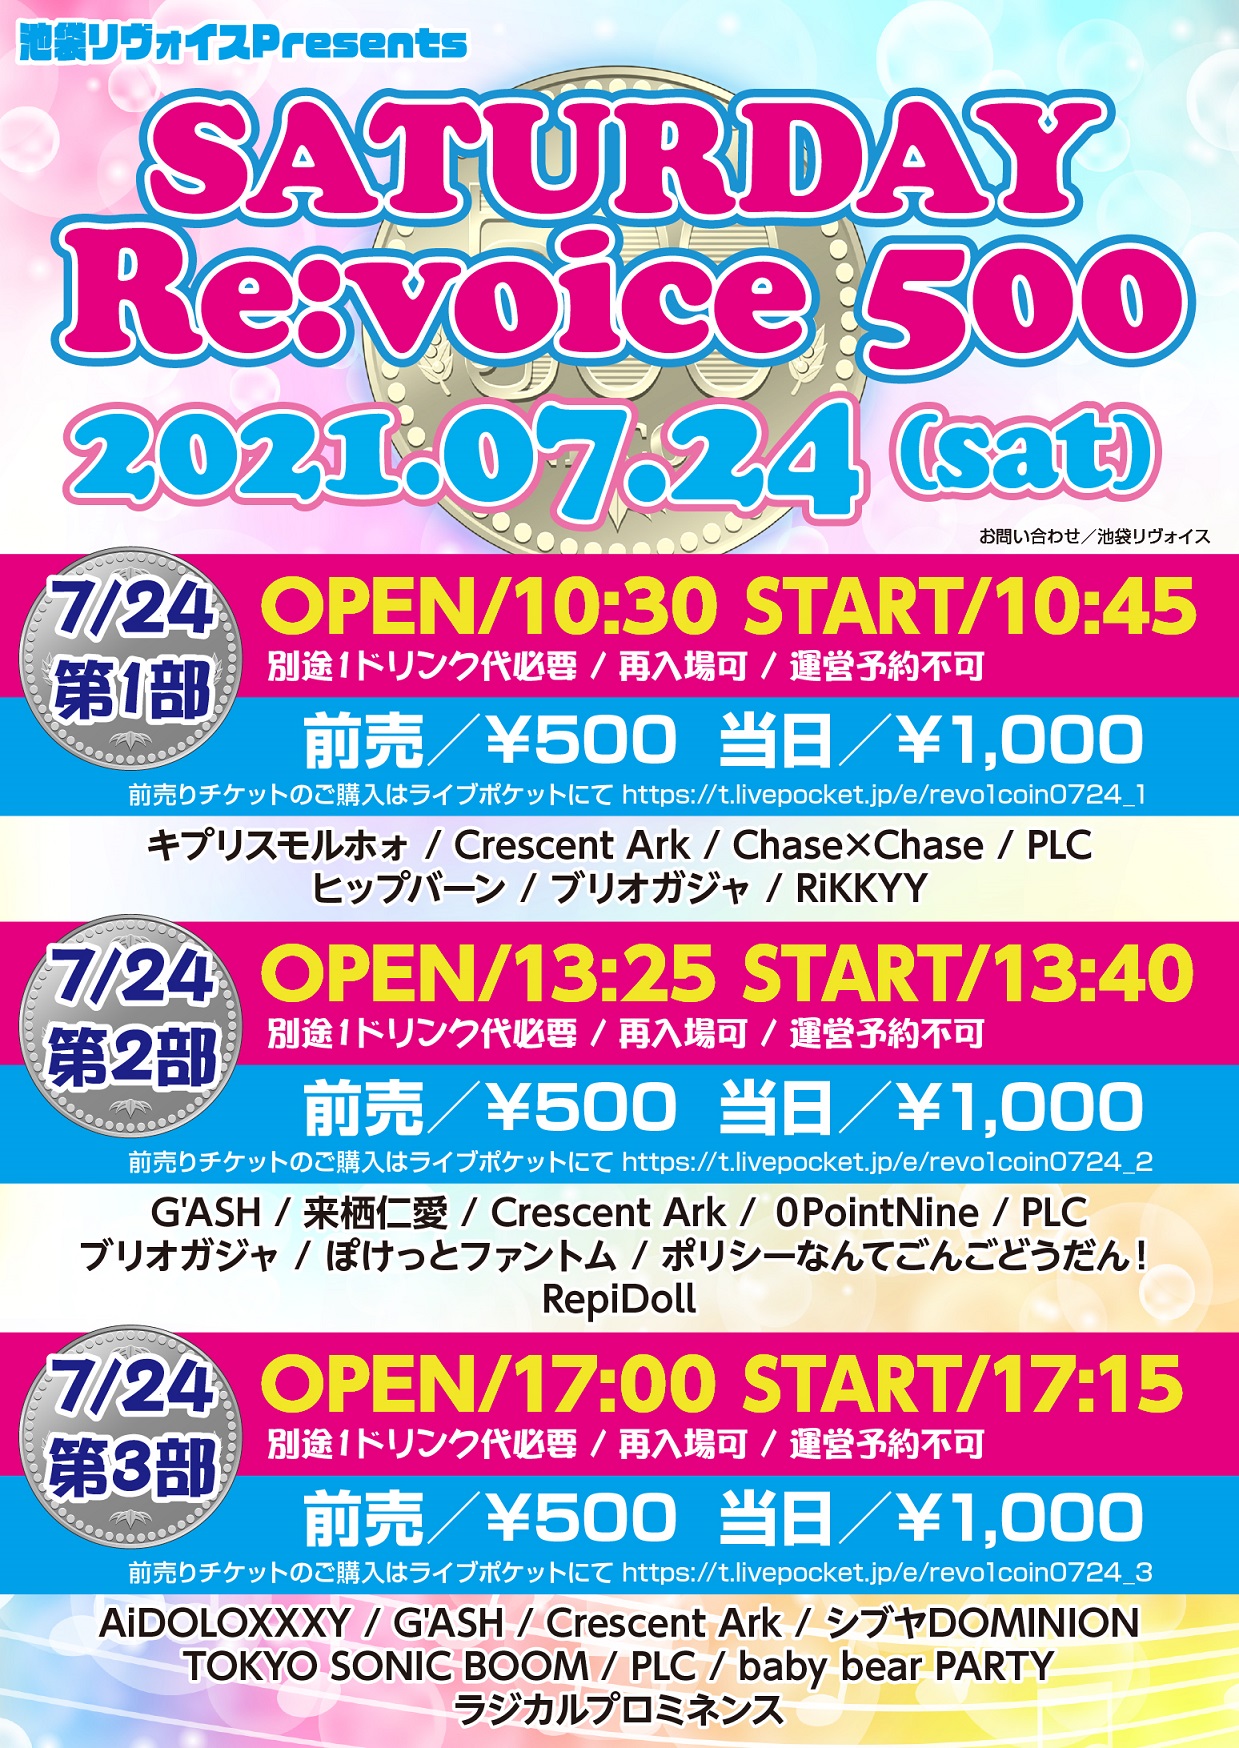 SUNDAY Revoice 500(07/24)